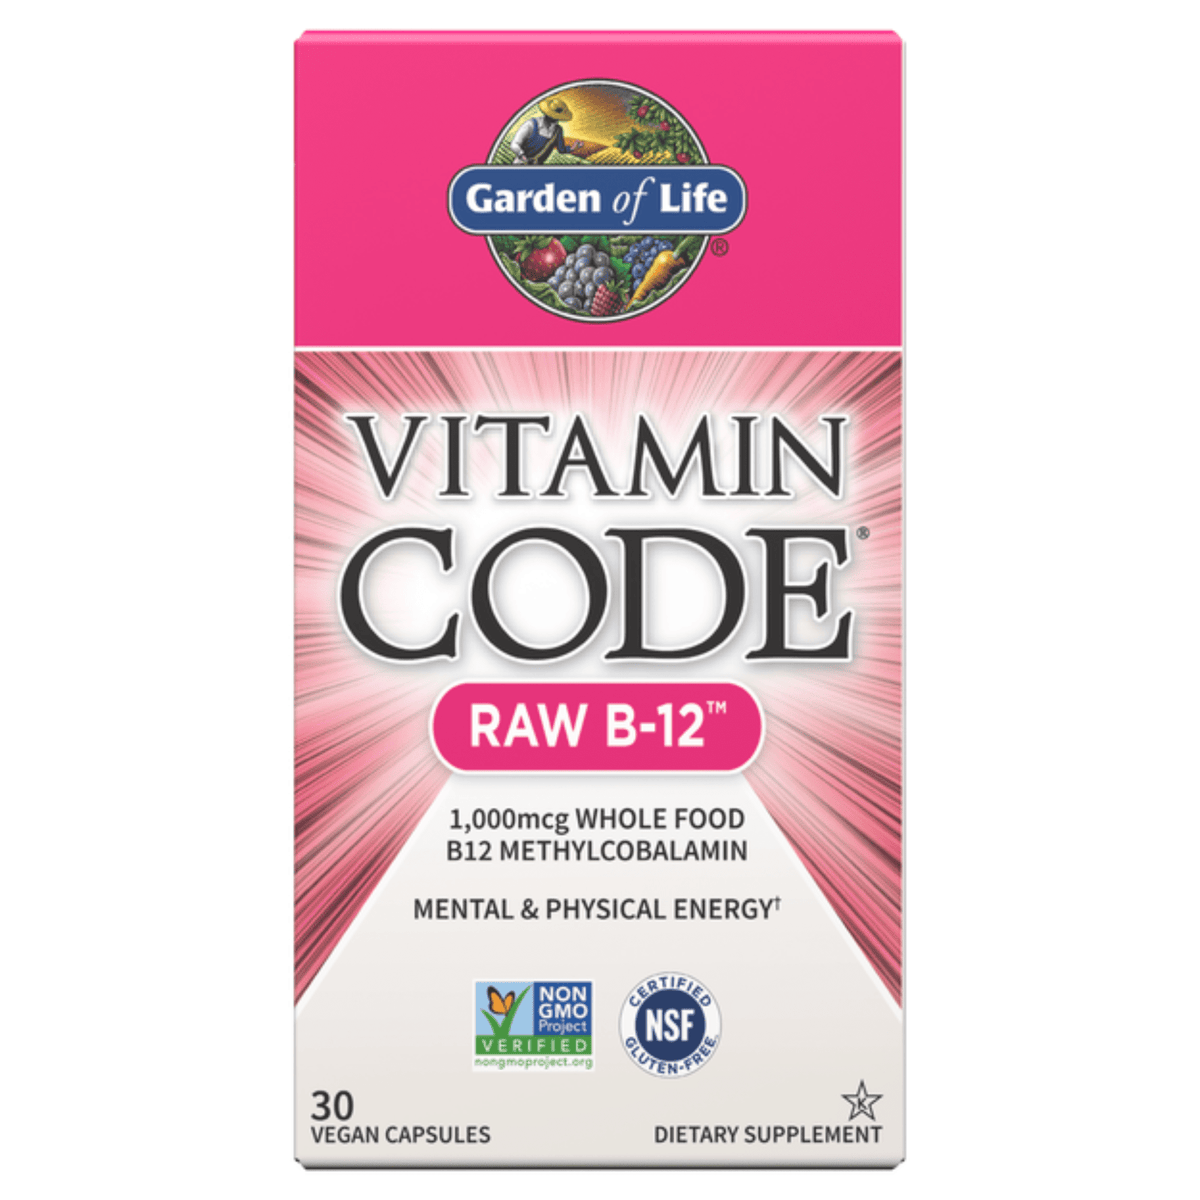 Primary Image of Vitamin Code Raw B-12